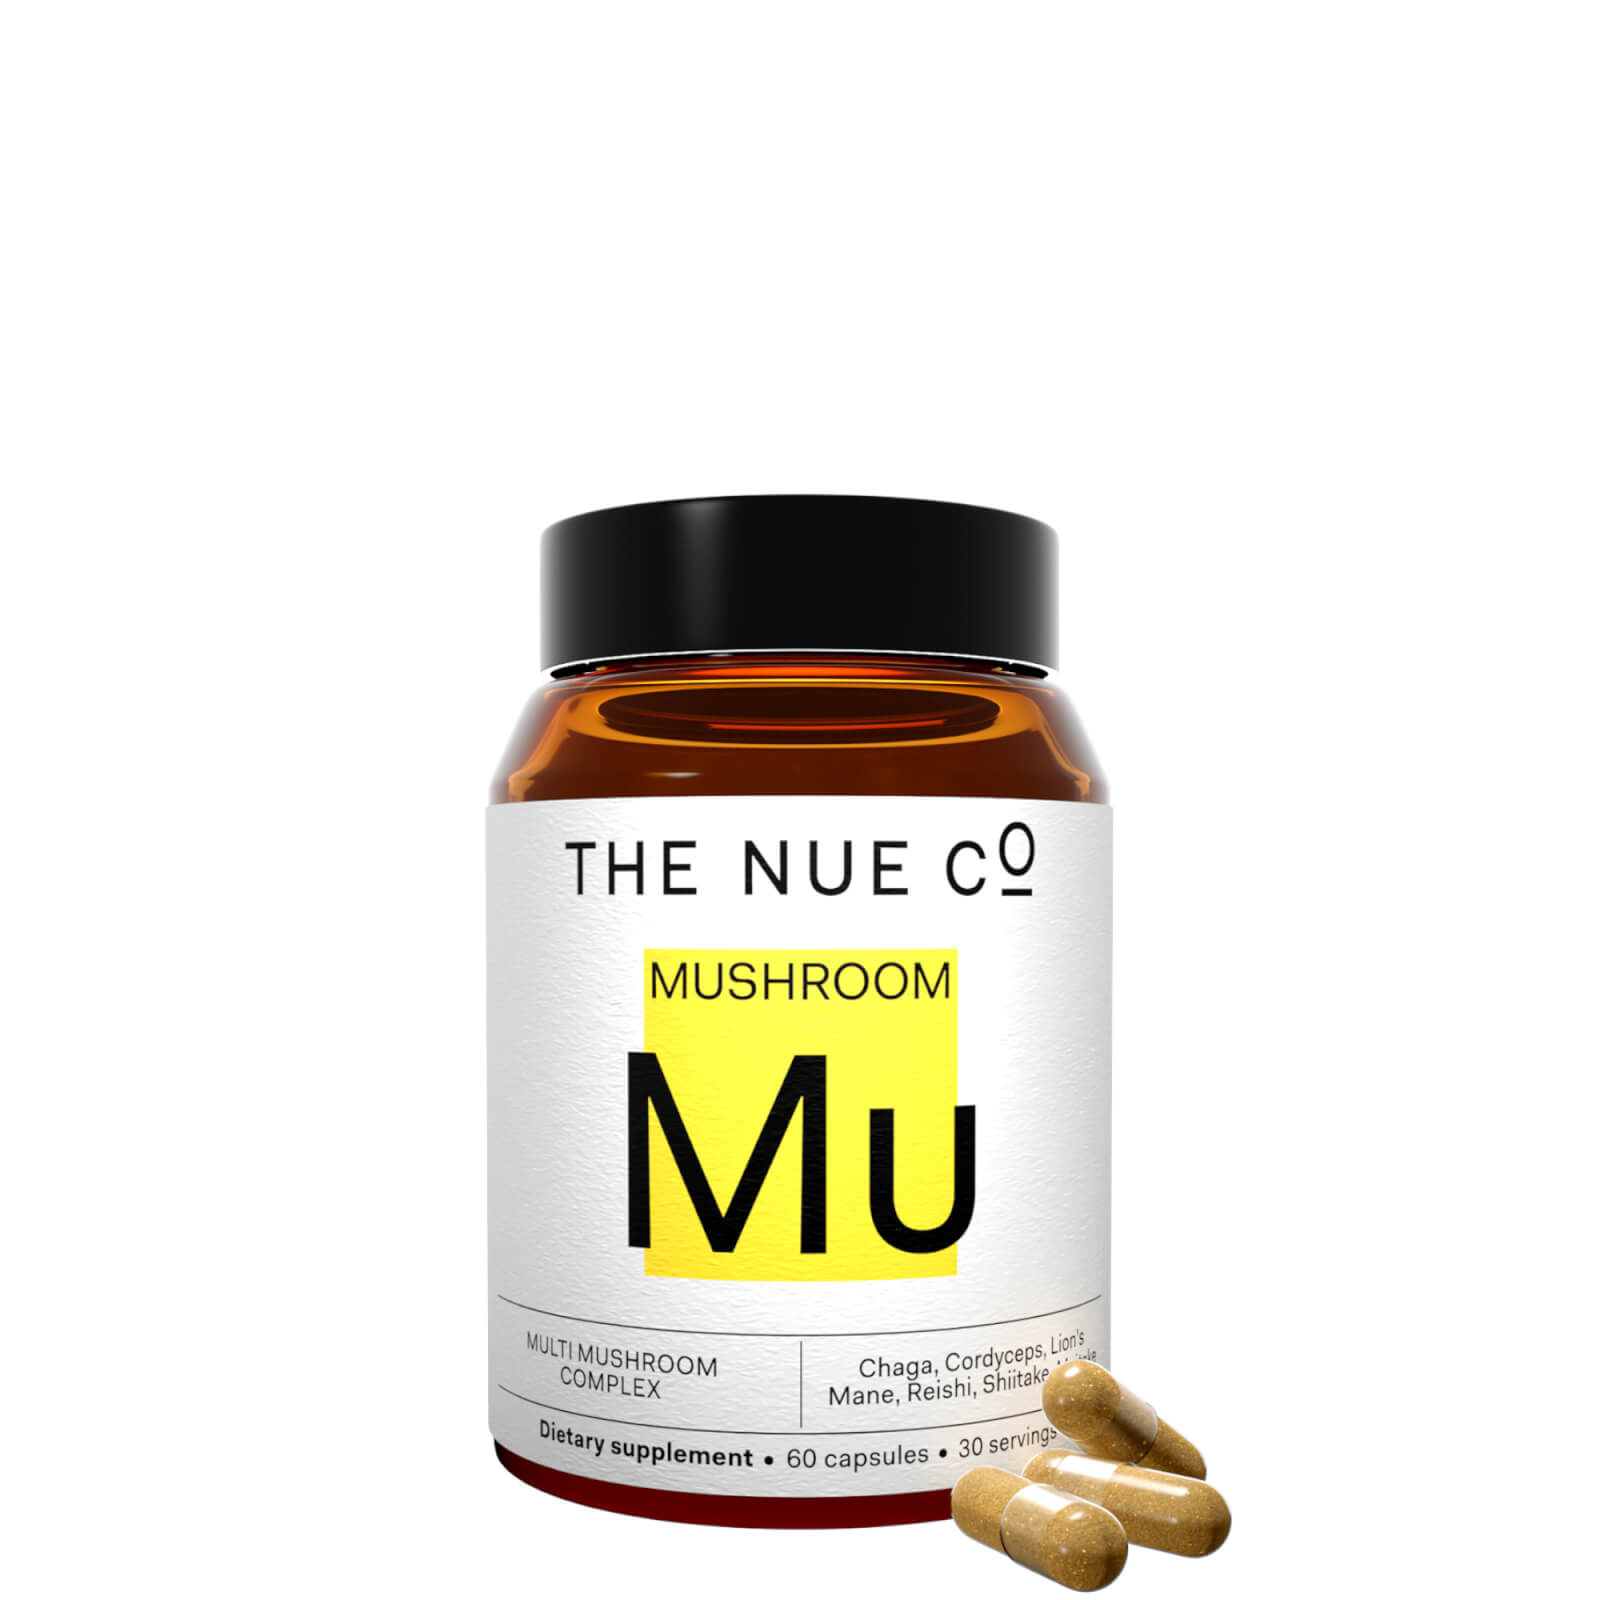 The Nue Co Multi Mushroom Complex Supplement To Increase Focus (60 Capsules) In White